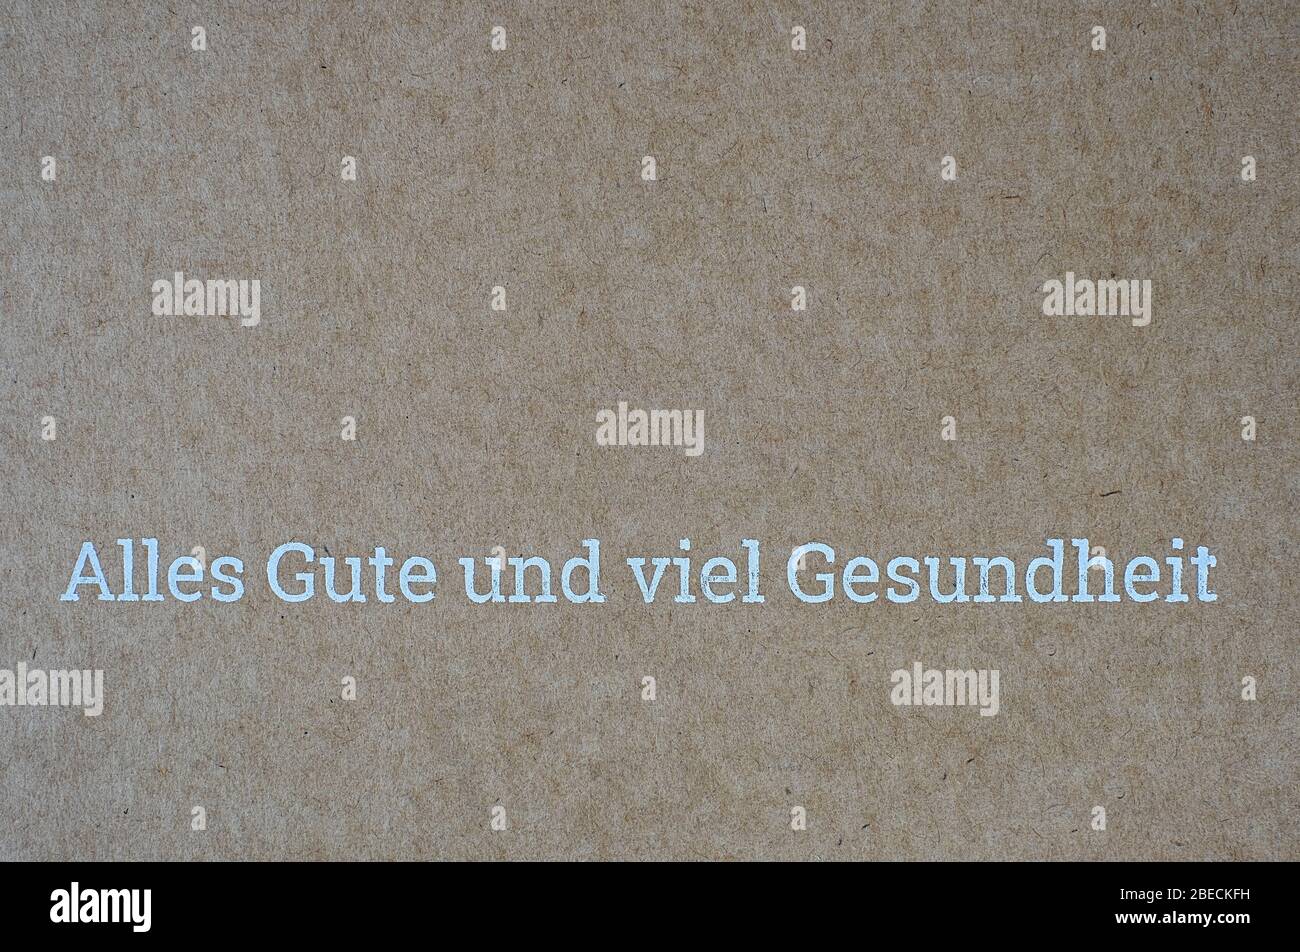 good wishes on cardboard in german language, Alles Gute und viel Gesundheit, in english, all the best and good health Stock Photo